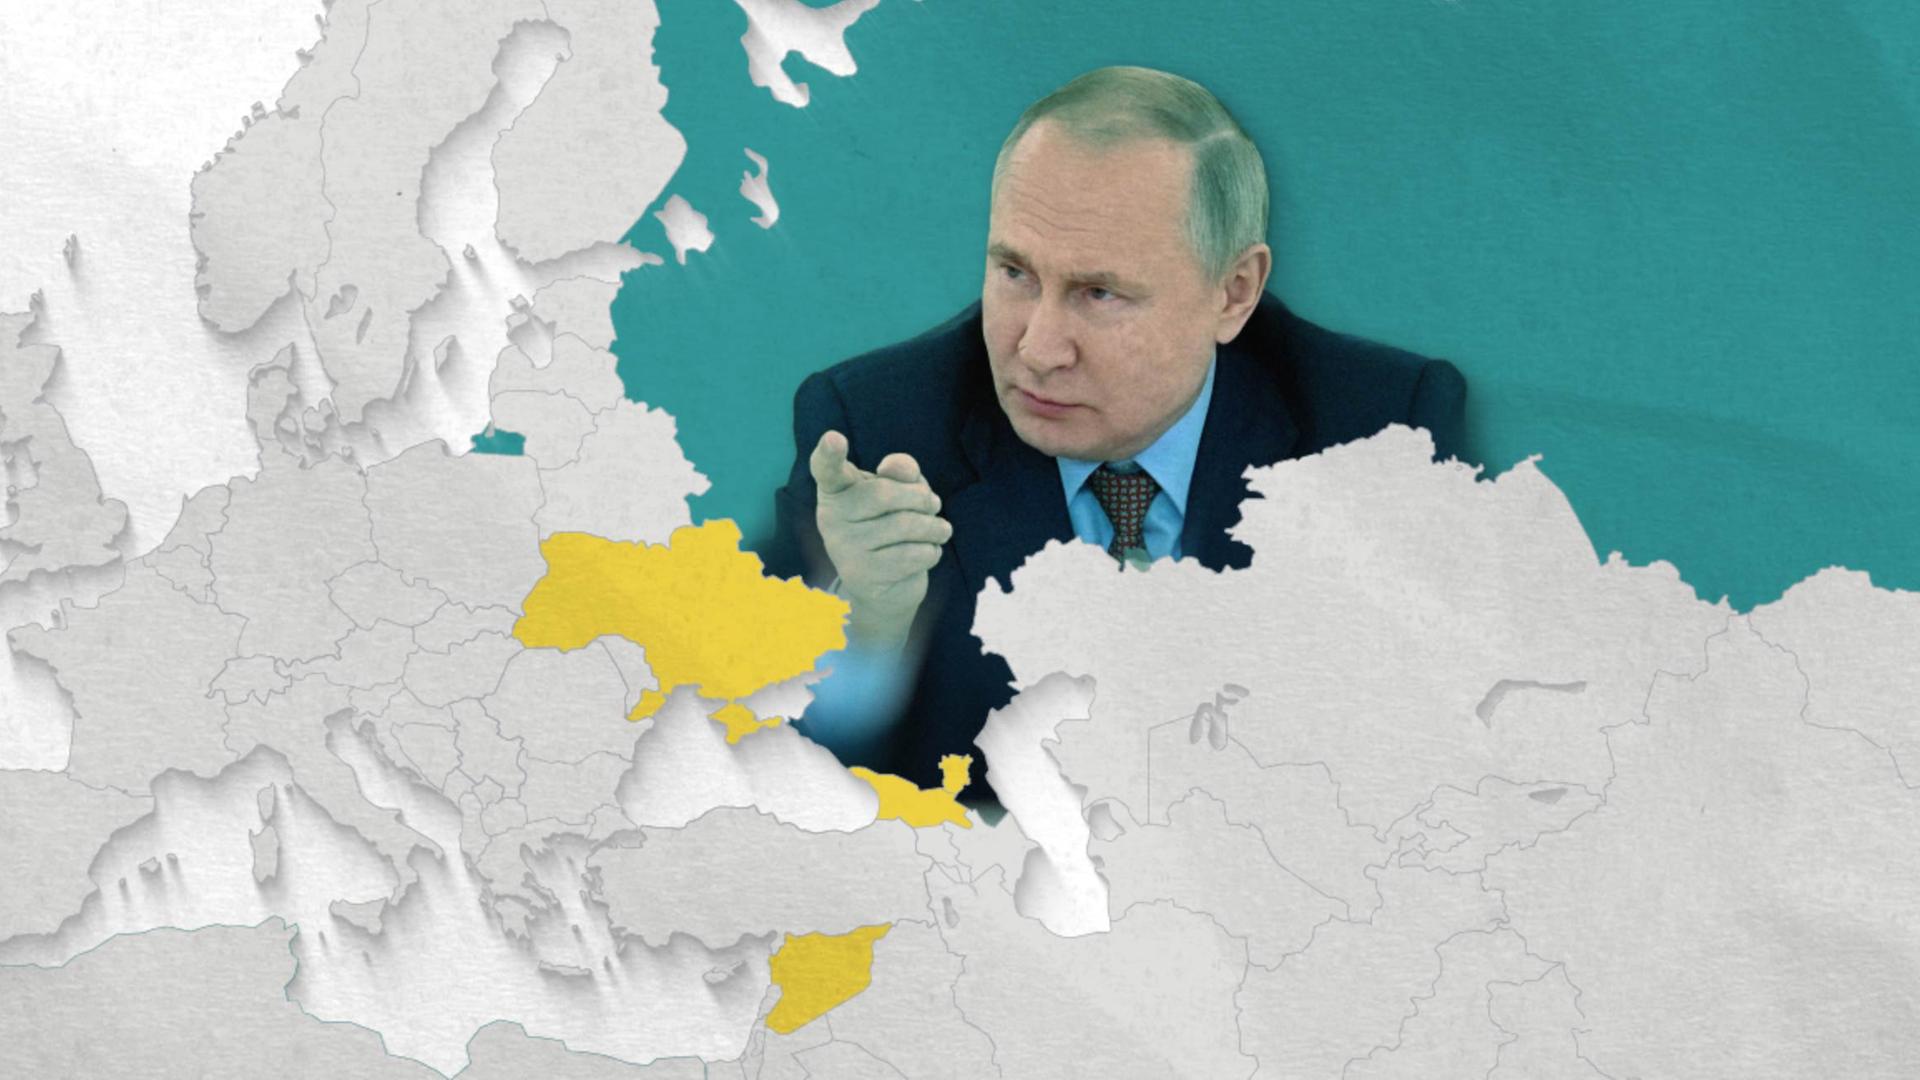 Putin on map with Russia, Ukraine, Georgia and Syria